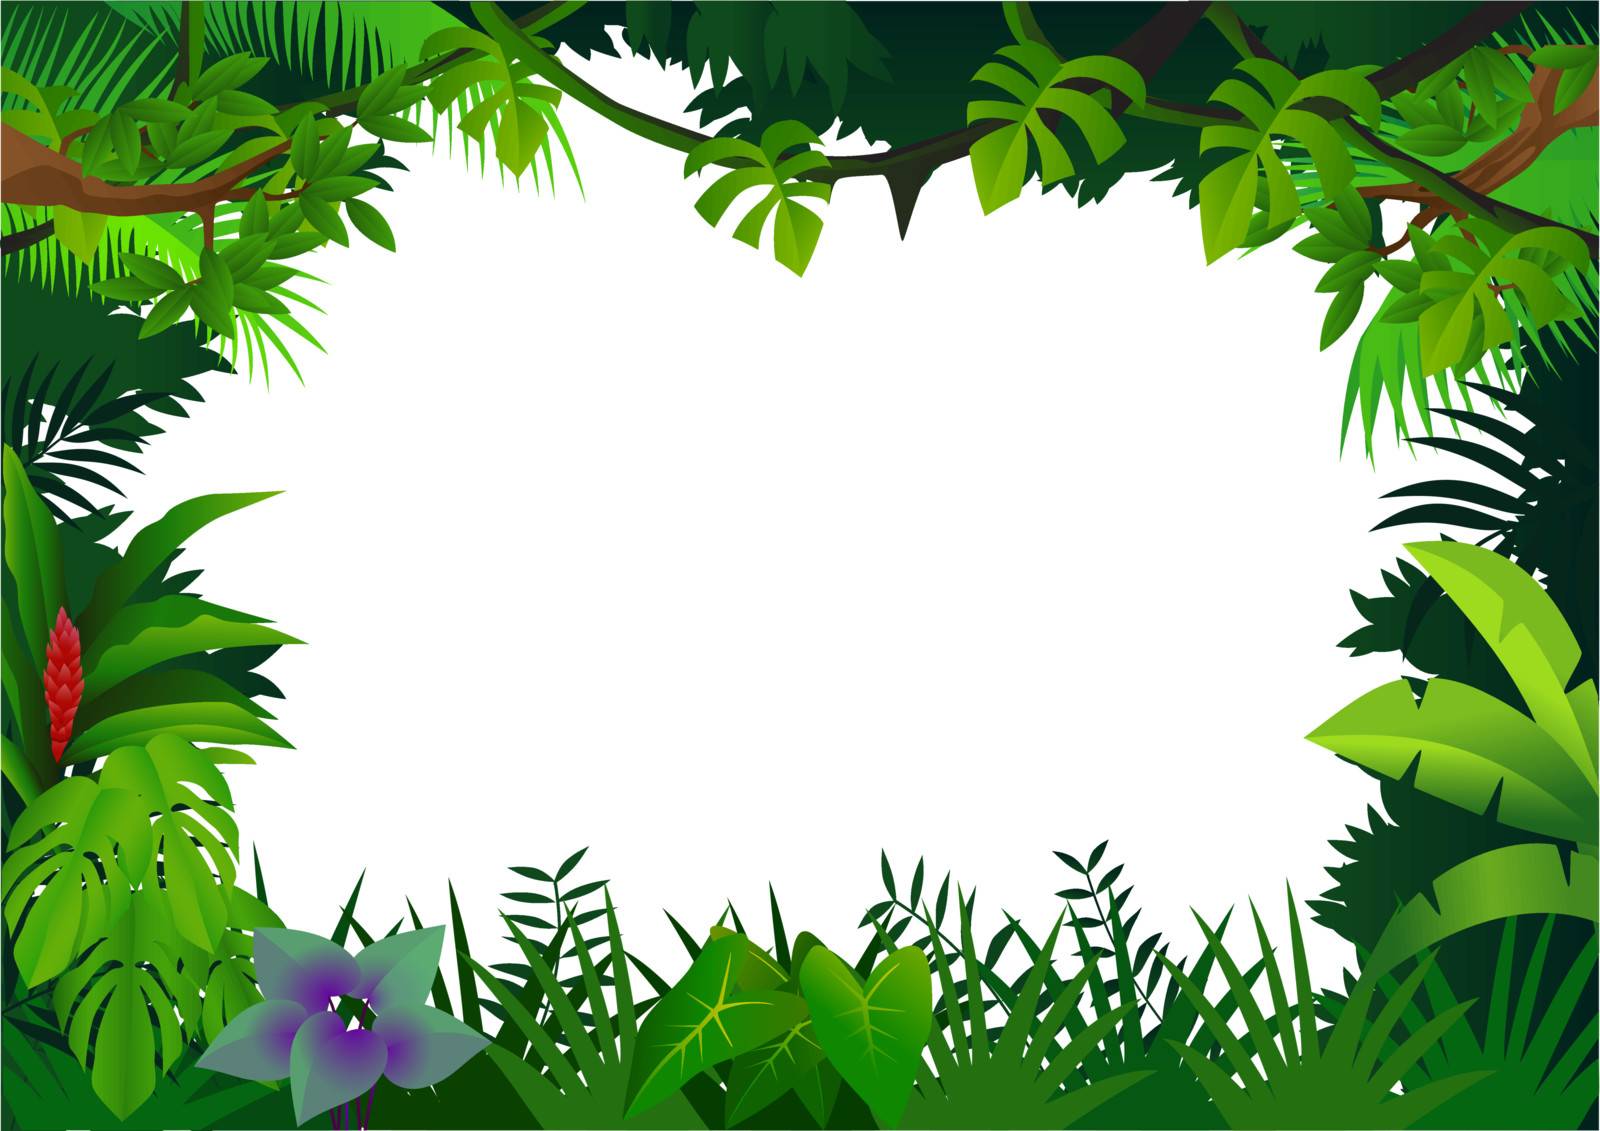 Vector illustration of forest background